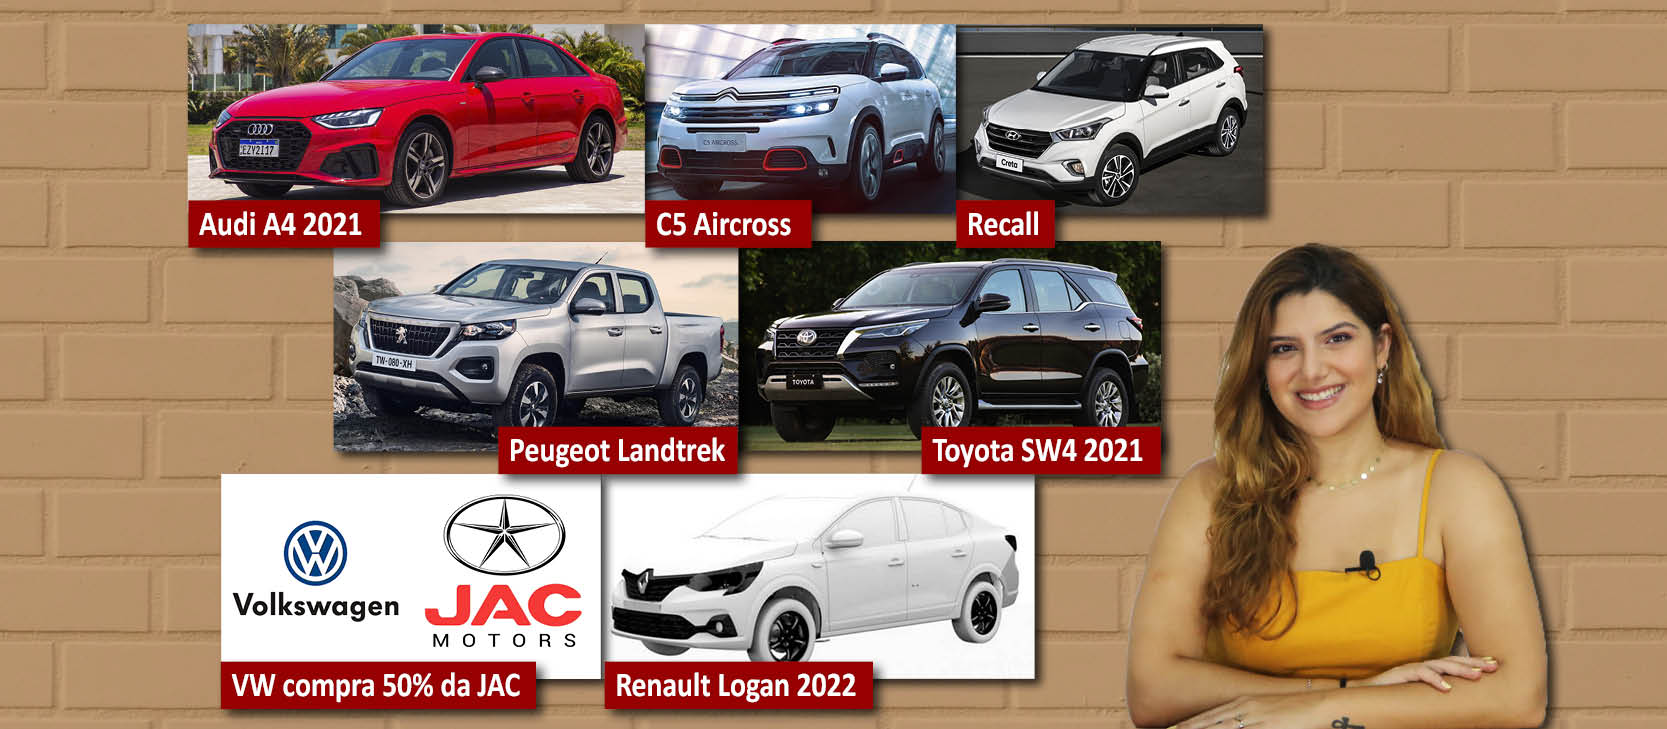 Volkswagen compra 50% da JAC chinesa